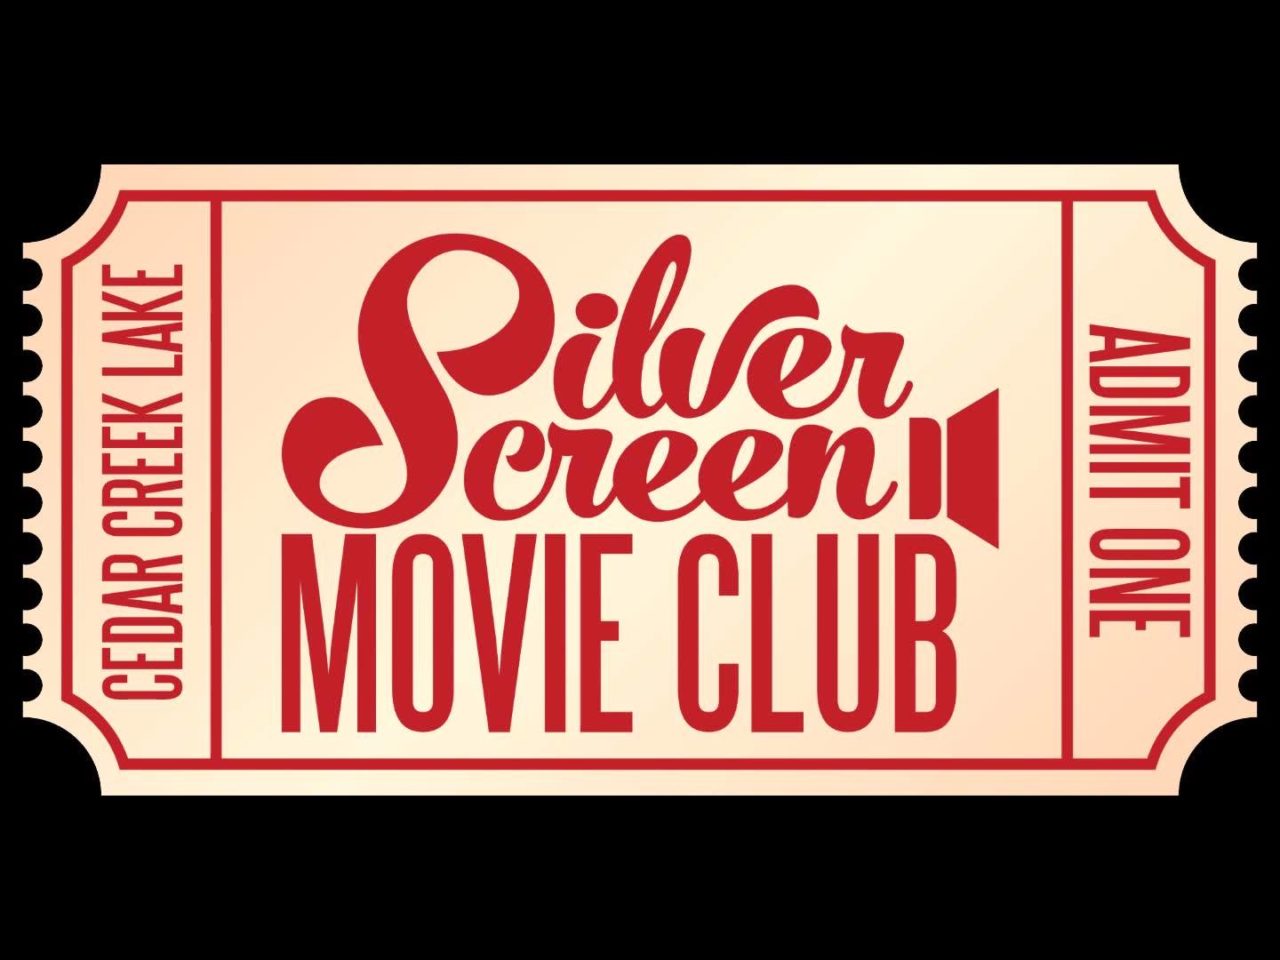 Silver Screen Movie Club